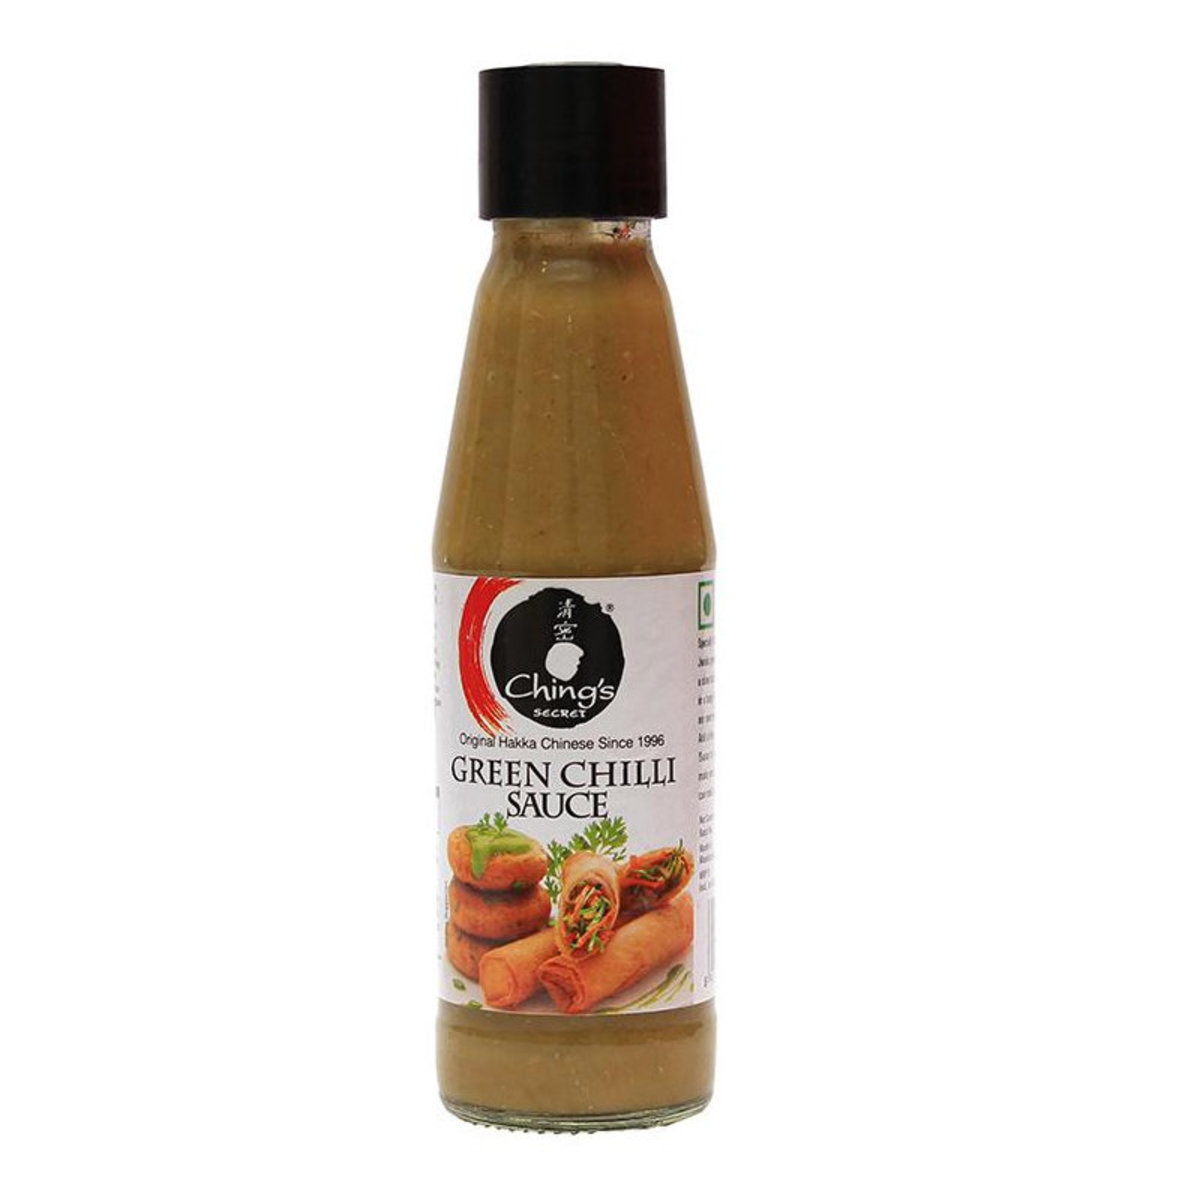 Green Chilli Sauce 200g x 2